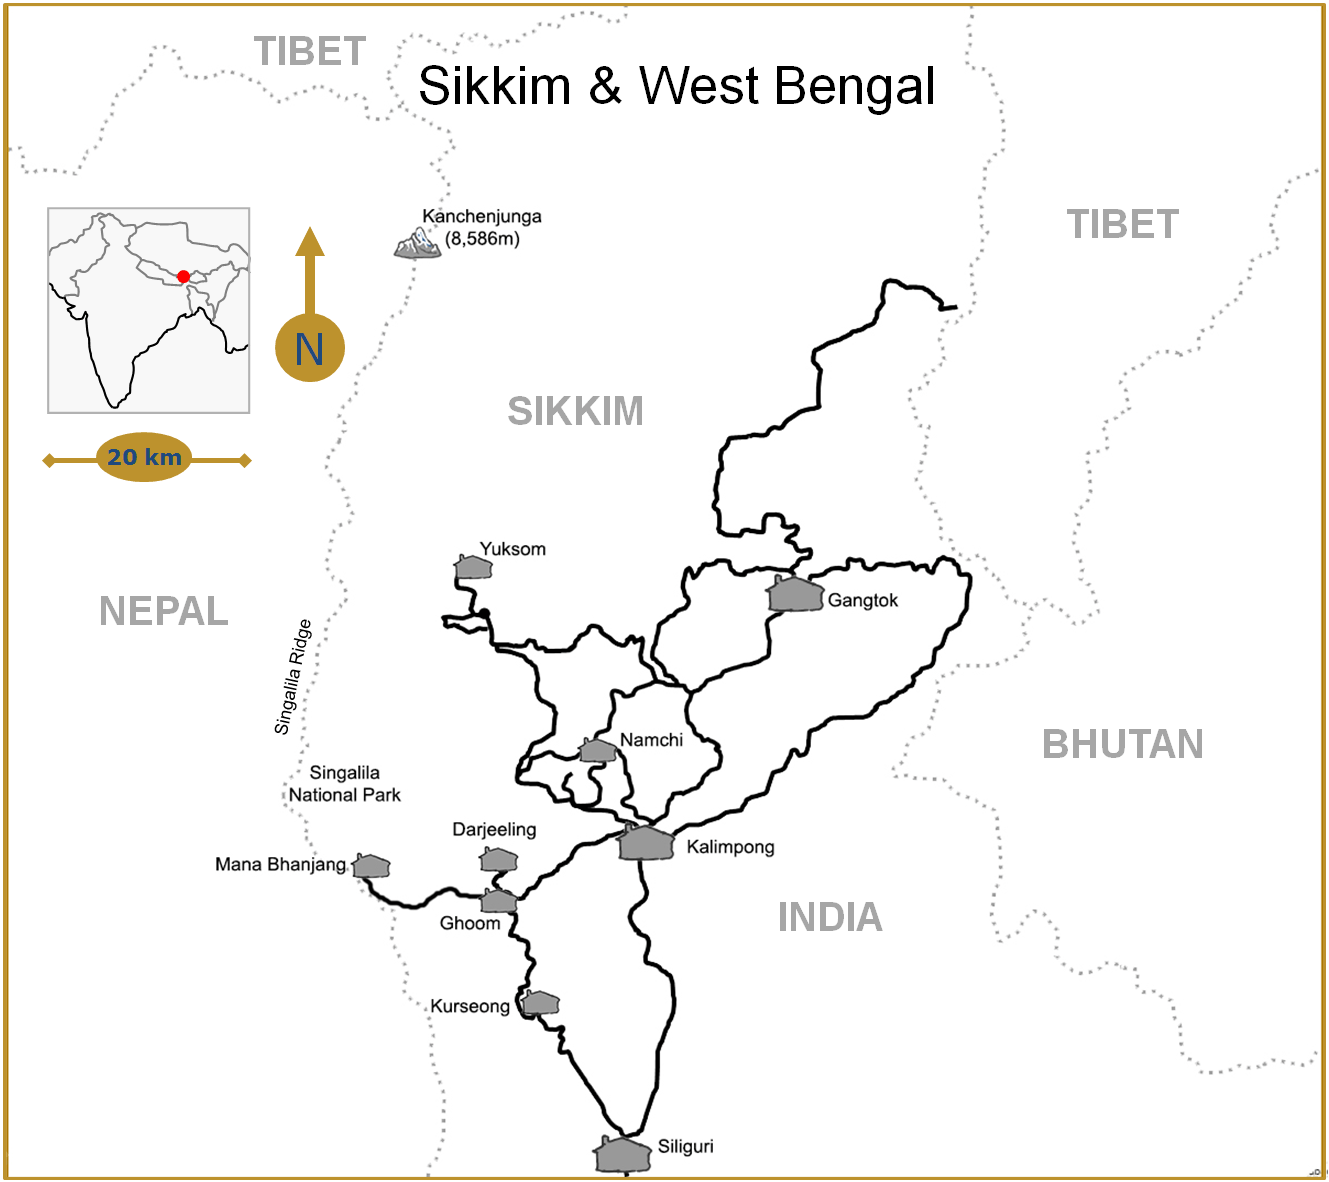 Sikkim & West Bengal map